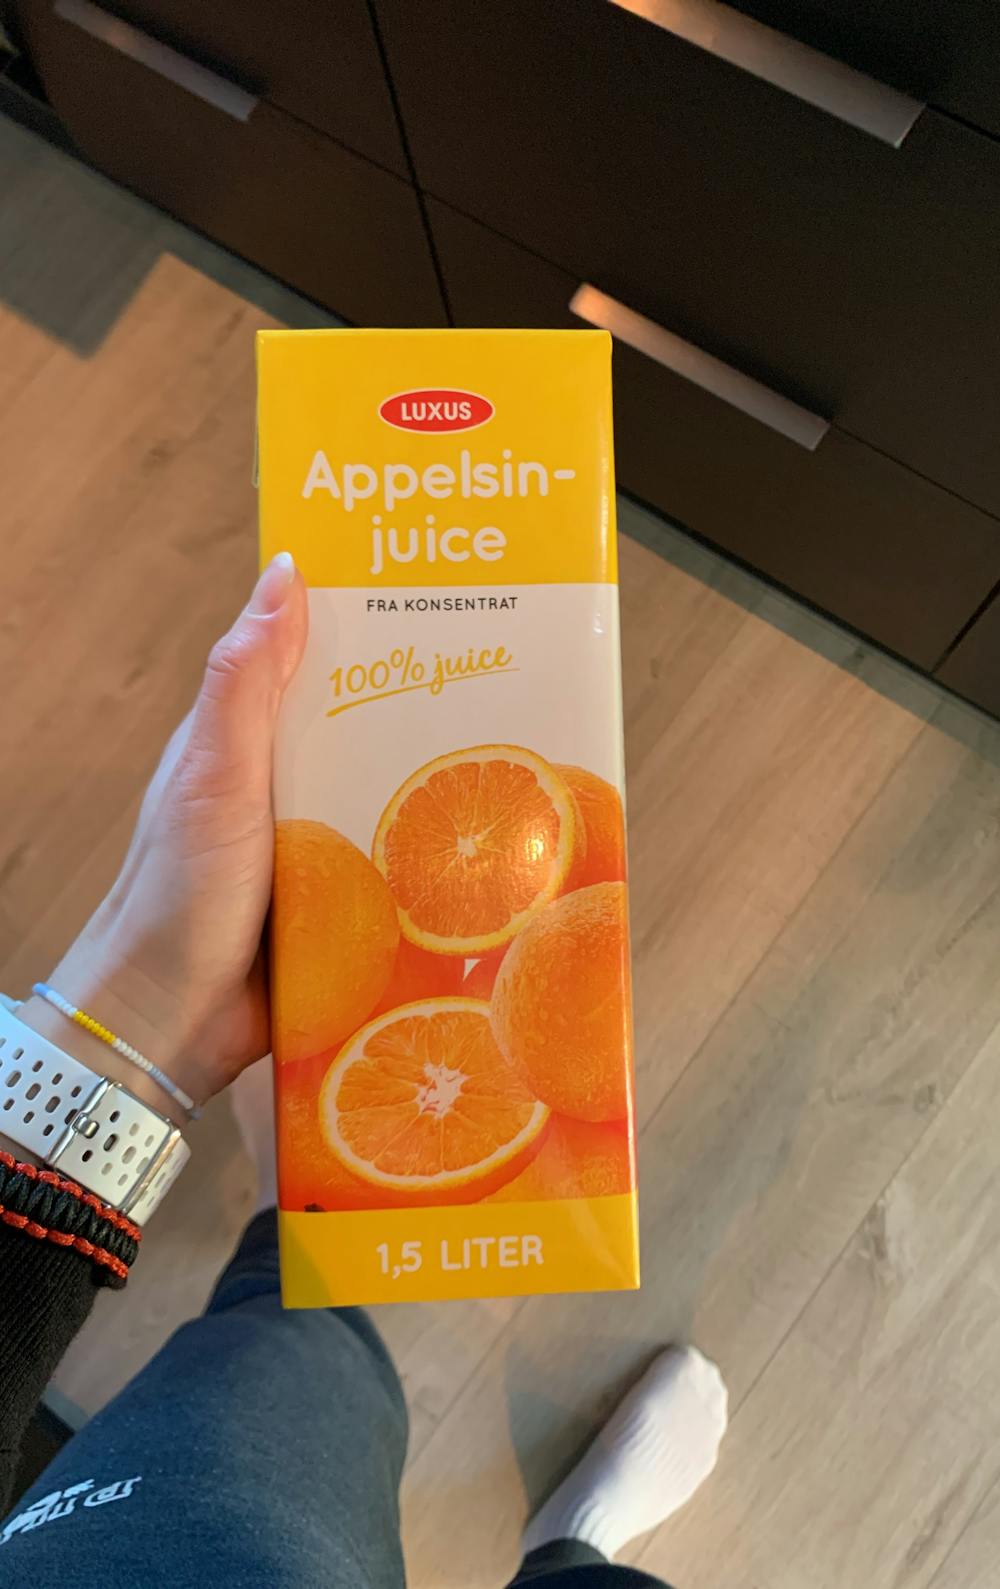 Appelsinjuice, Luxus